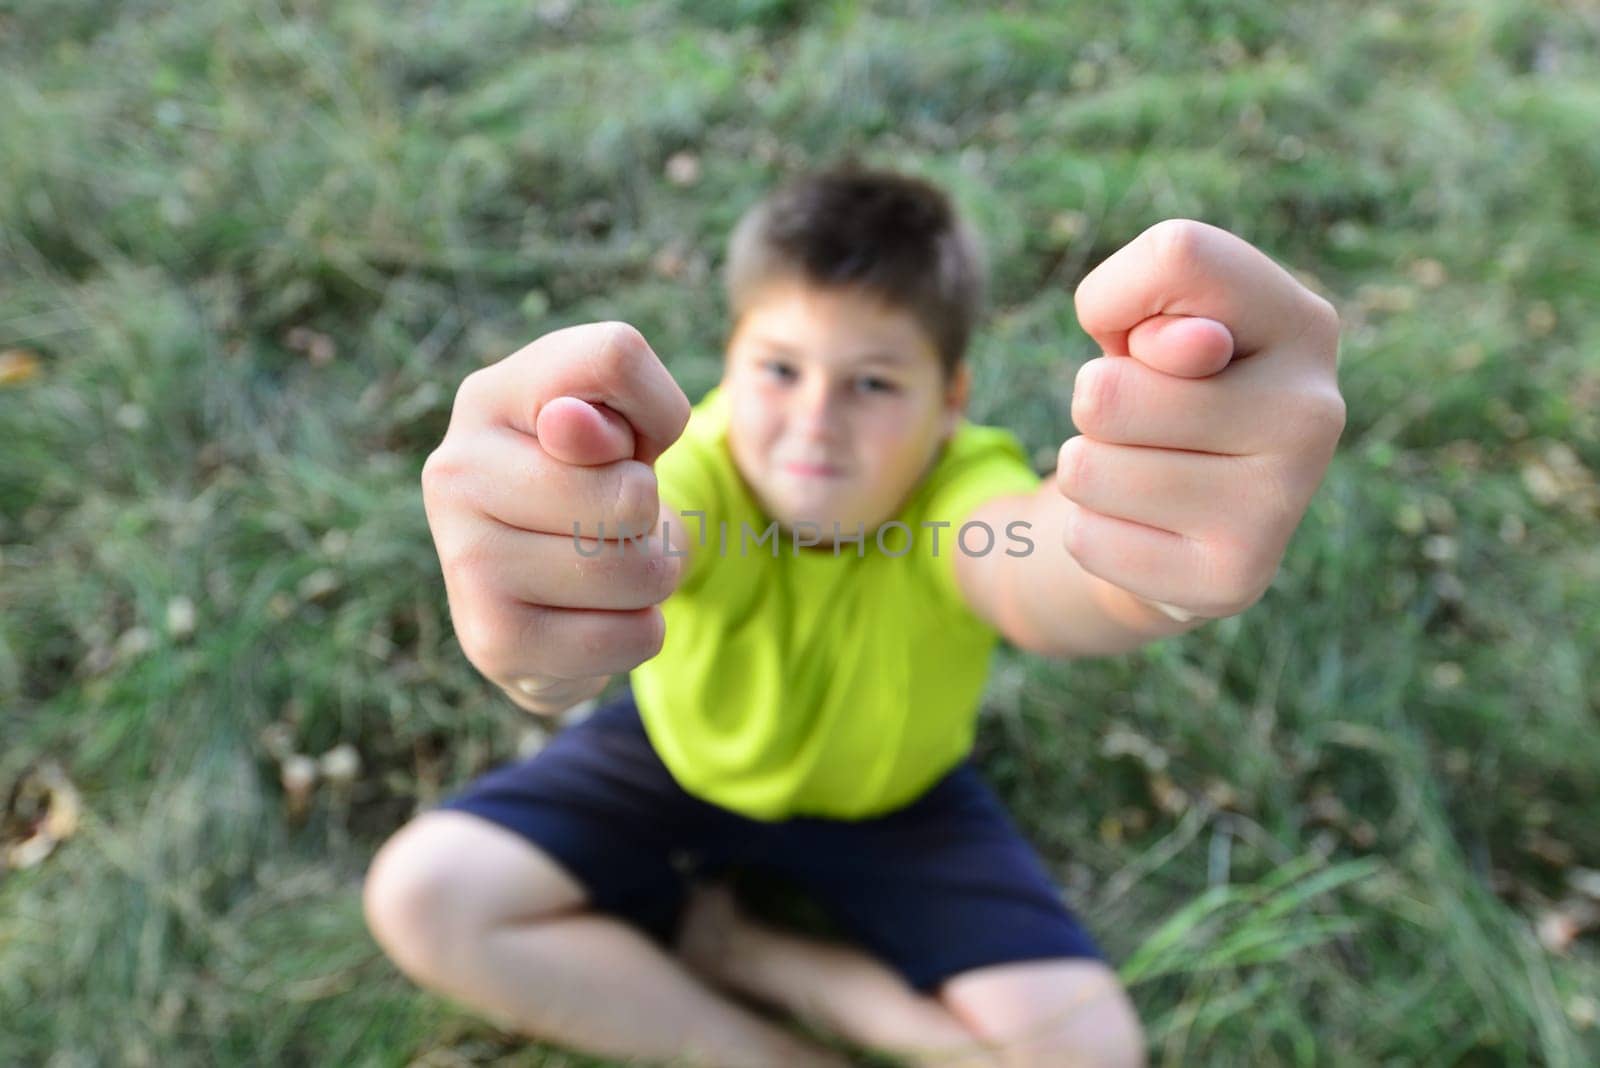 Teen boy shows the hand gesture.